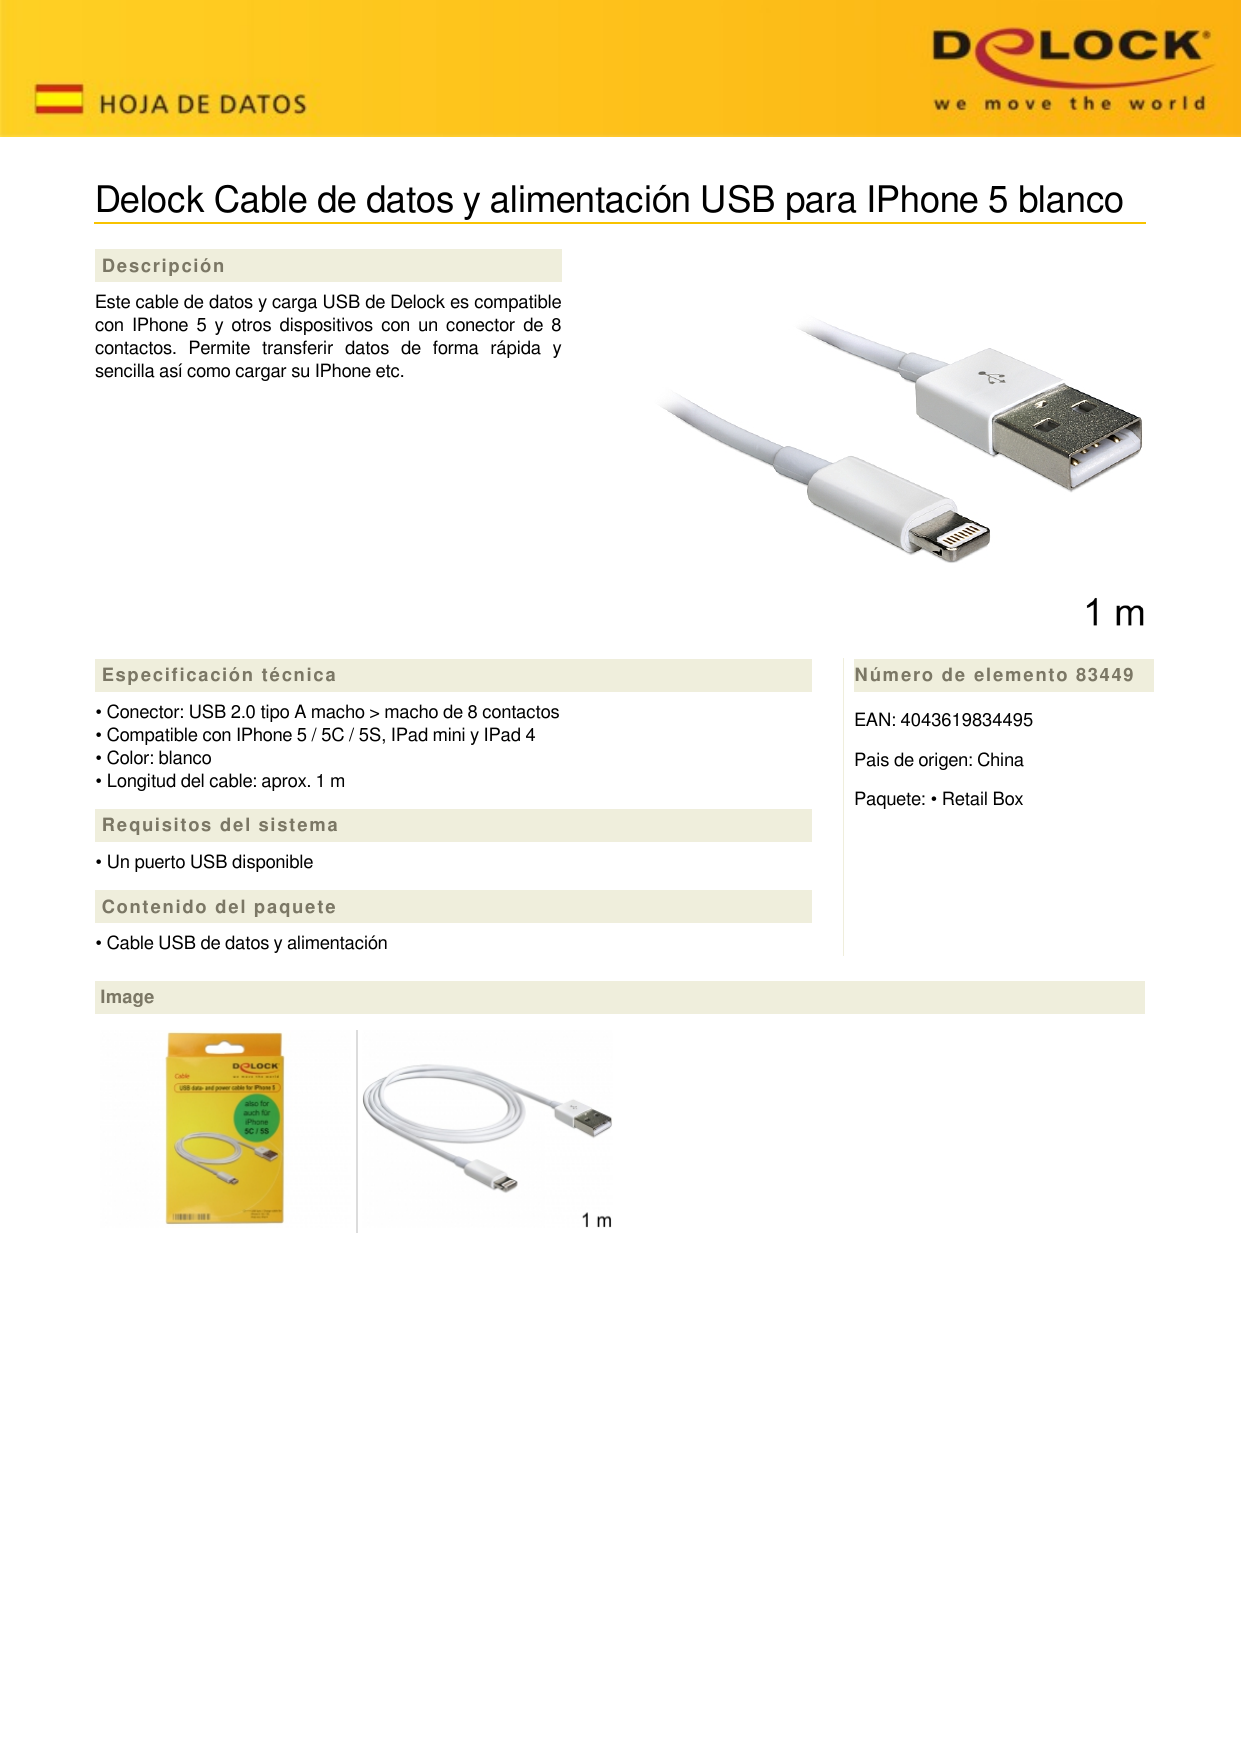 A USB 2.0 M APPLE IPHONE IPOD IPAD MINI CABLE DE DATOS 30-PIN M BLANCO 